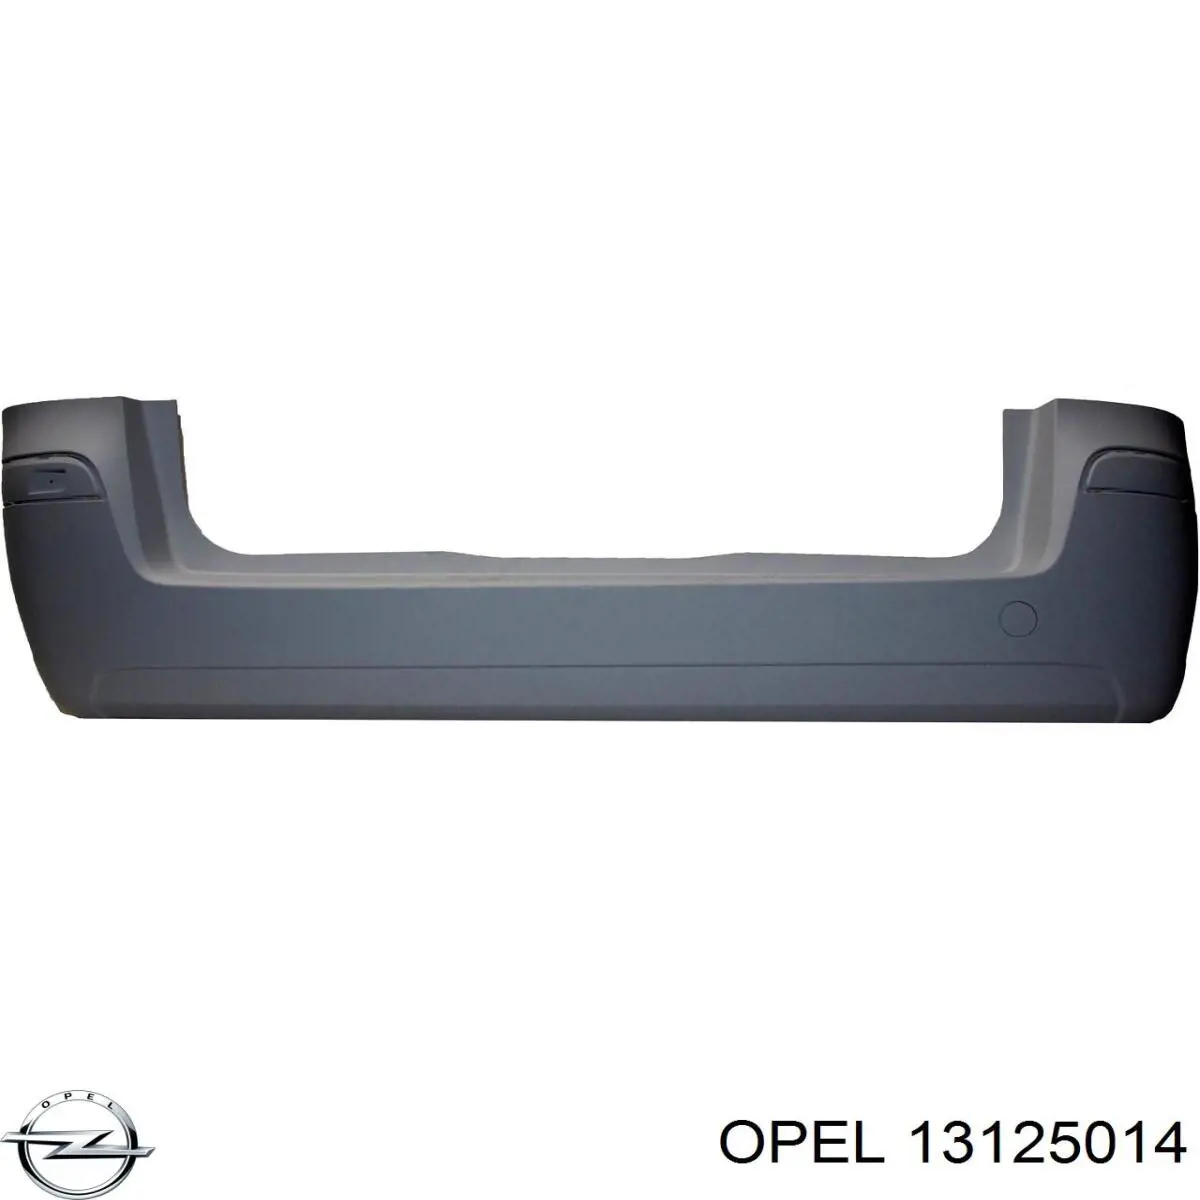 13125014 Opel parachoques trasero